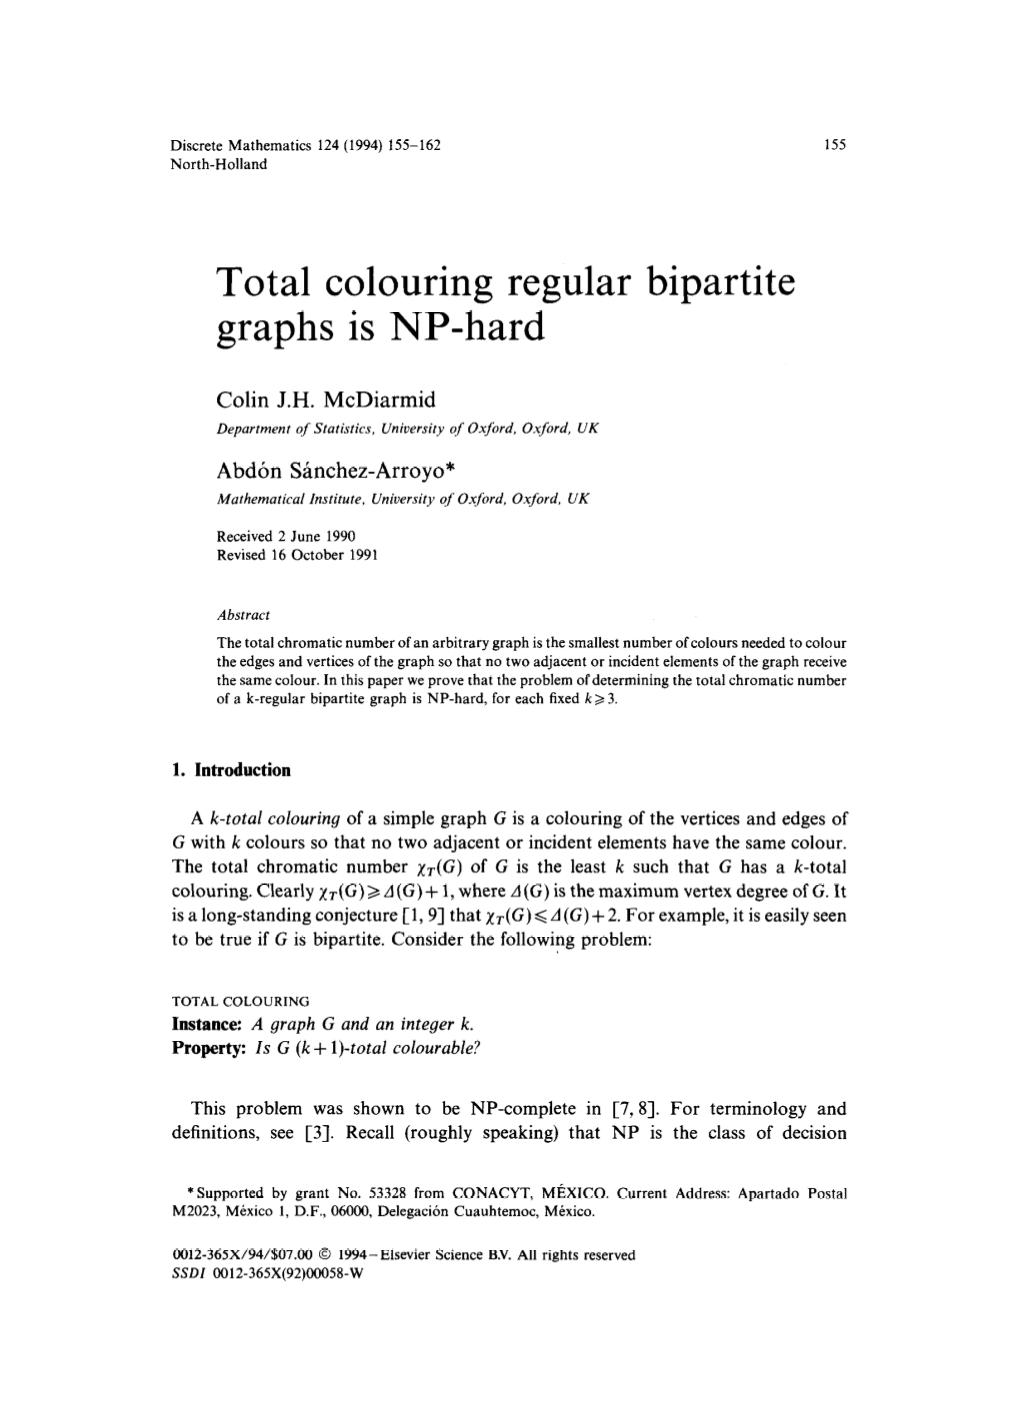 Total Colouring Regular Bipartite Graphs Is NP-Hard